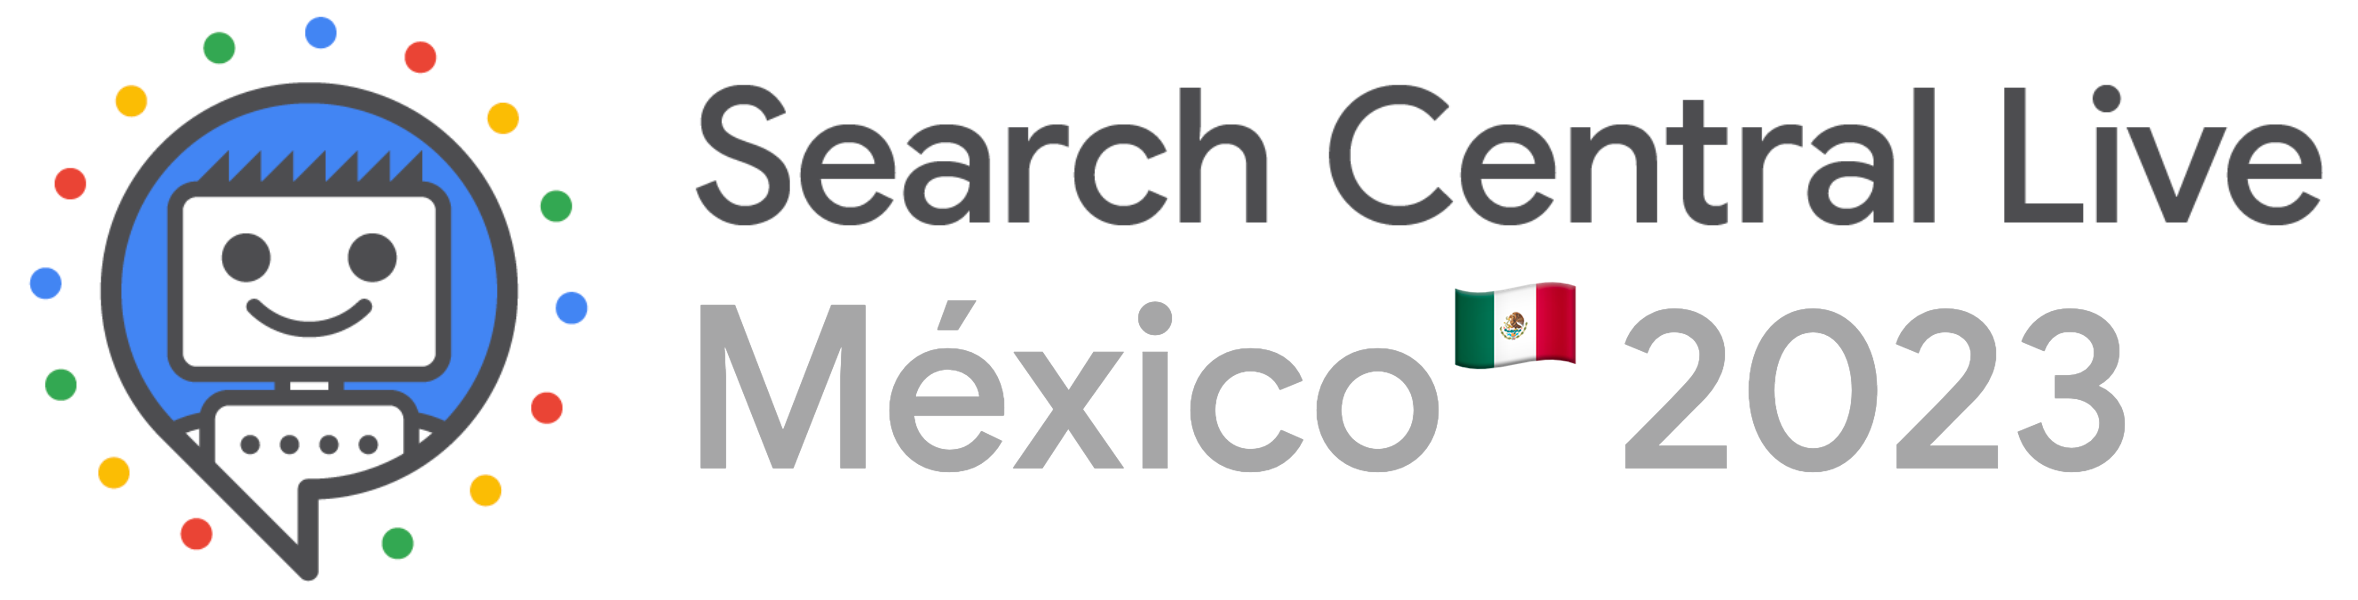 Search Central Live Mexico logo